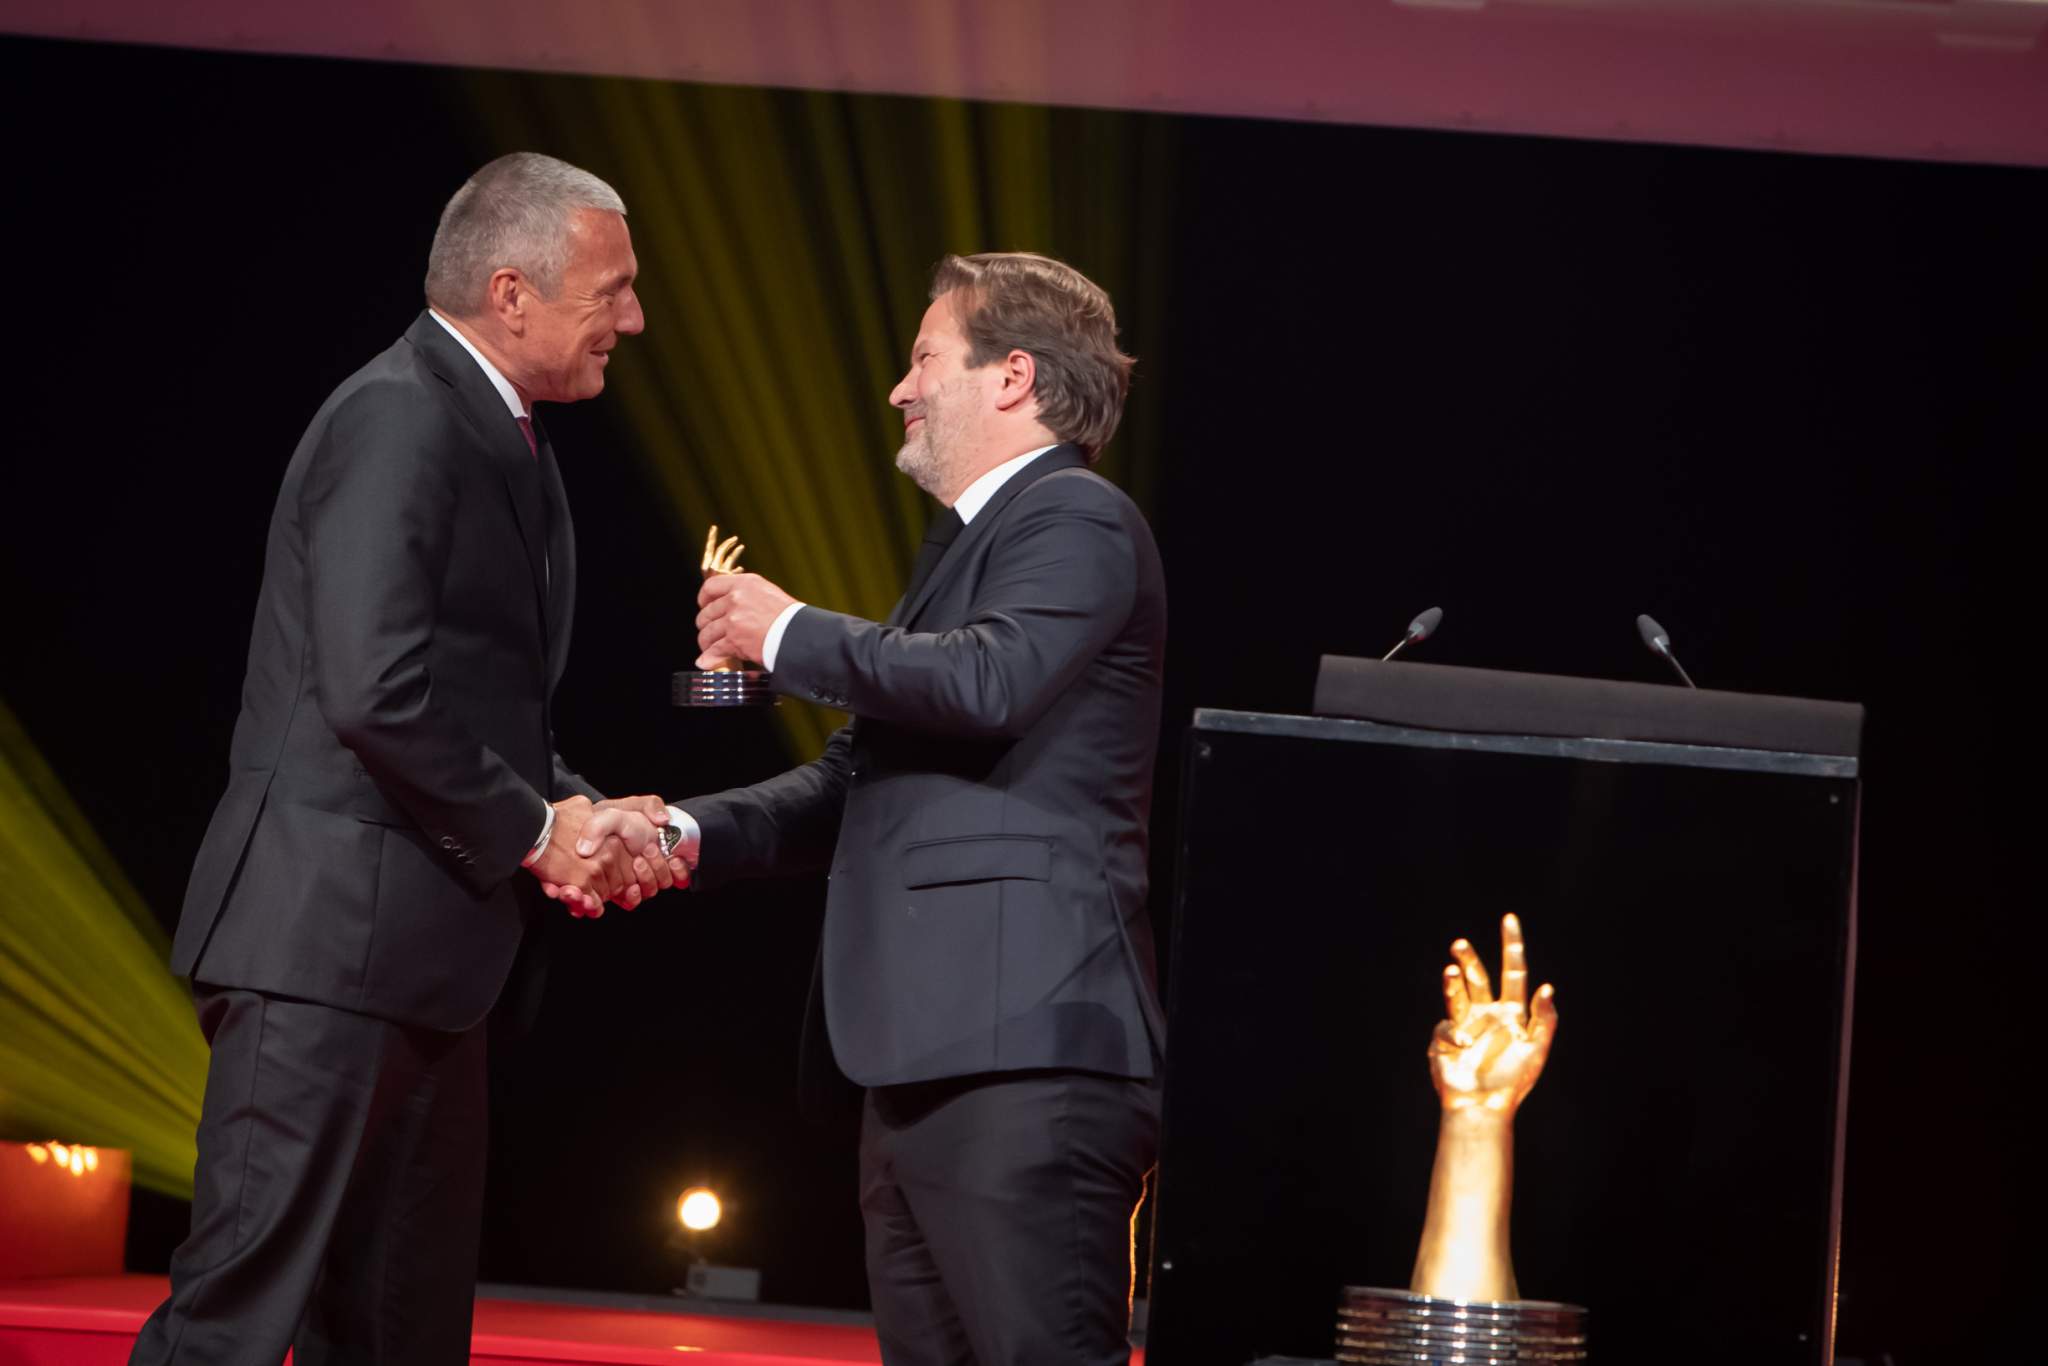 Jean-Christophe Babin, CEO of Bulgari, winner of the “Aiguille d’Or” Grand Prix 2021